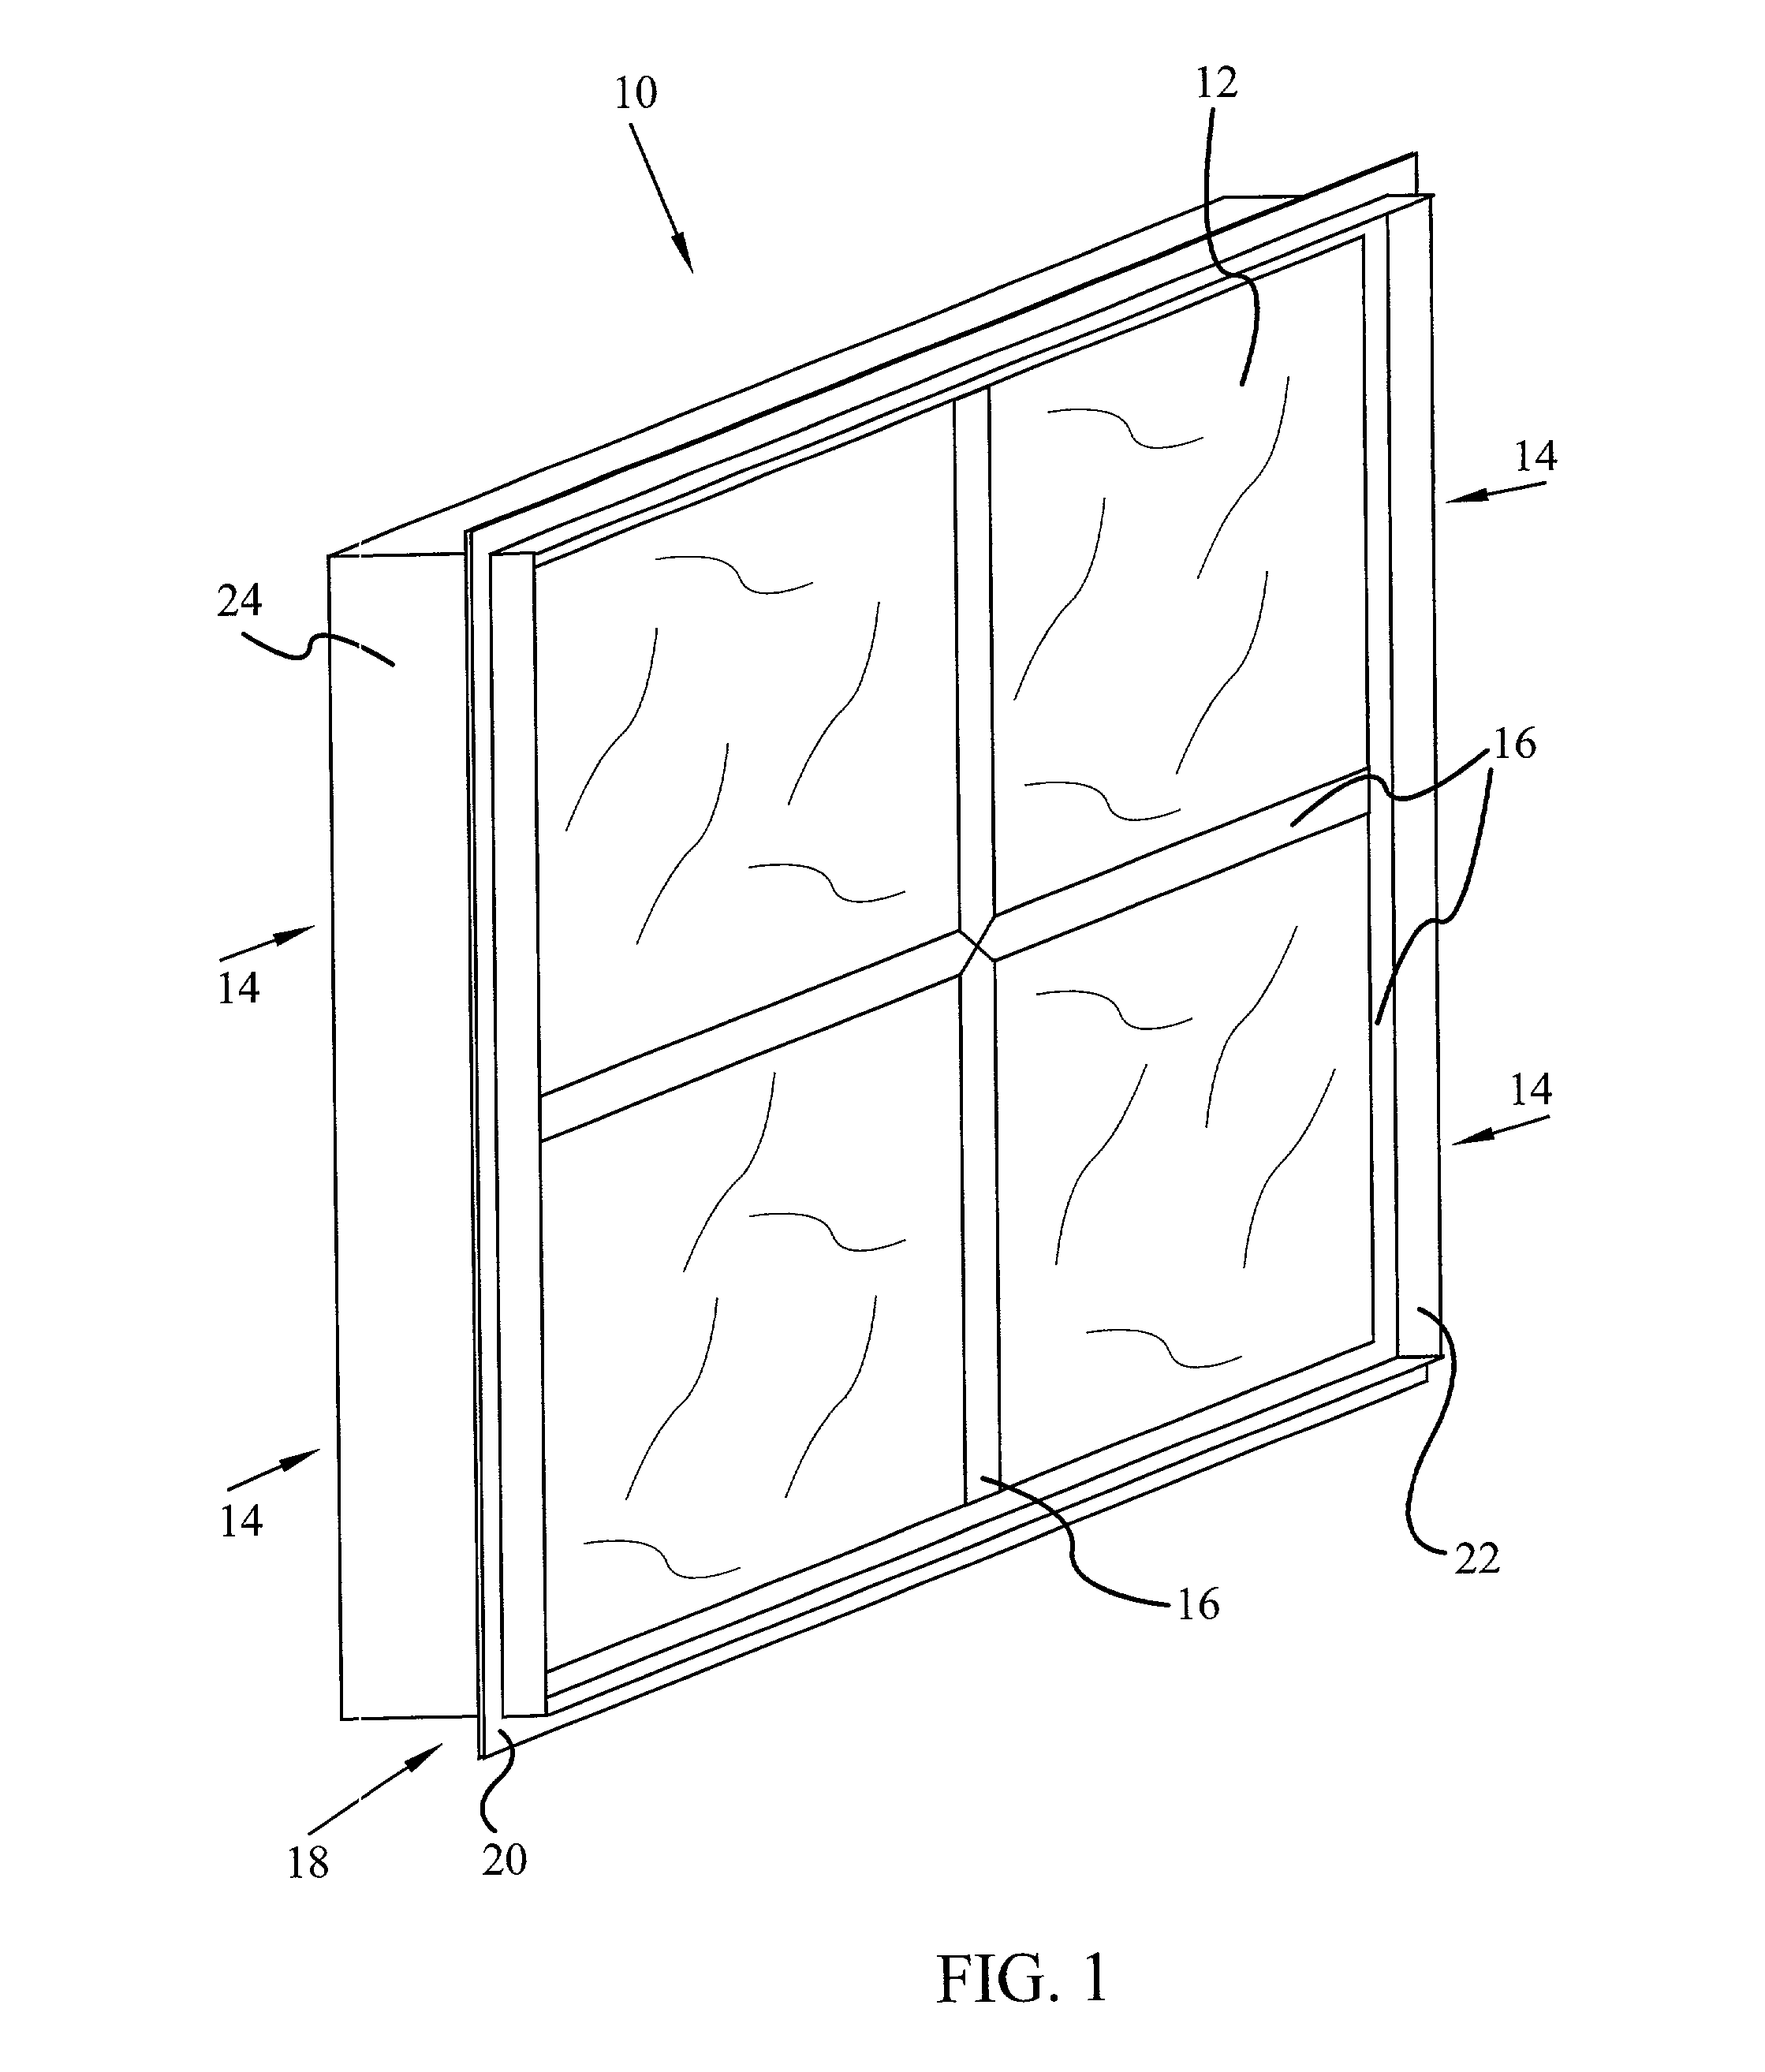 Glass block structure with phenolic resin framework